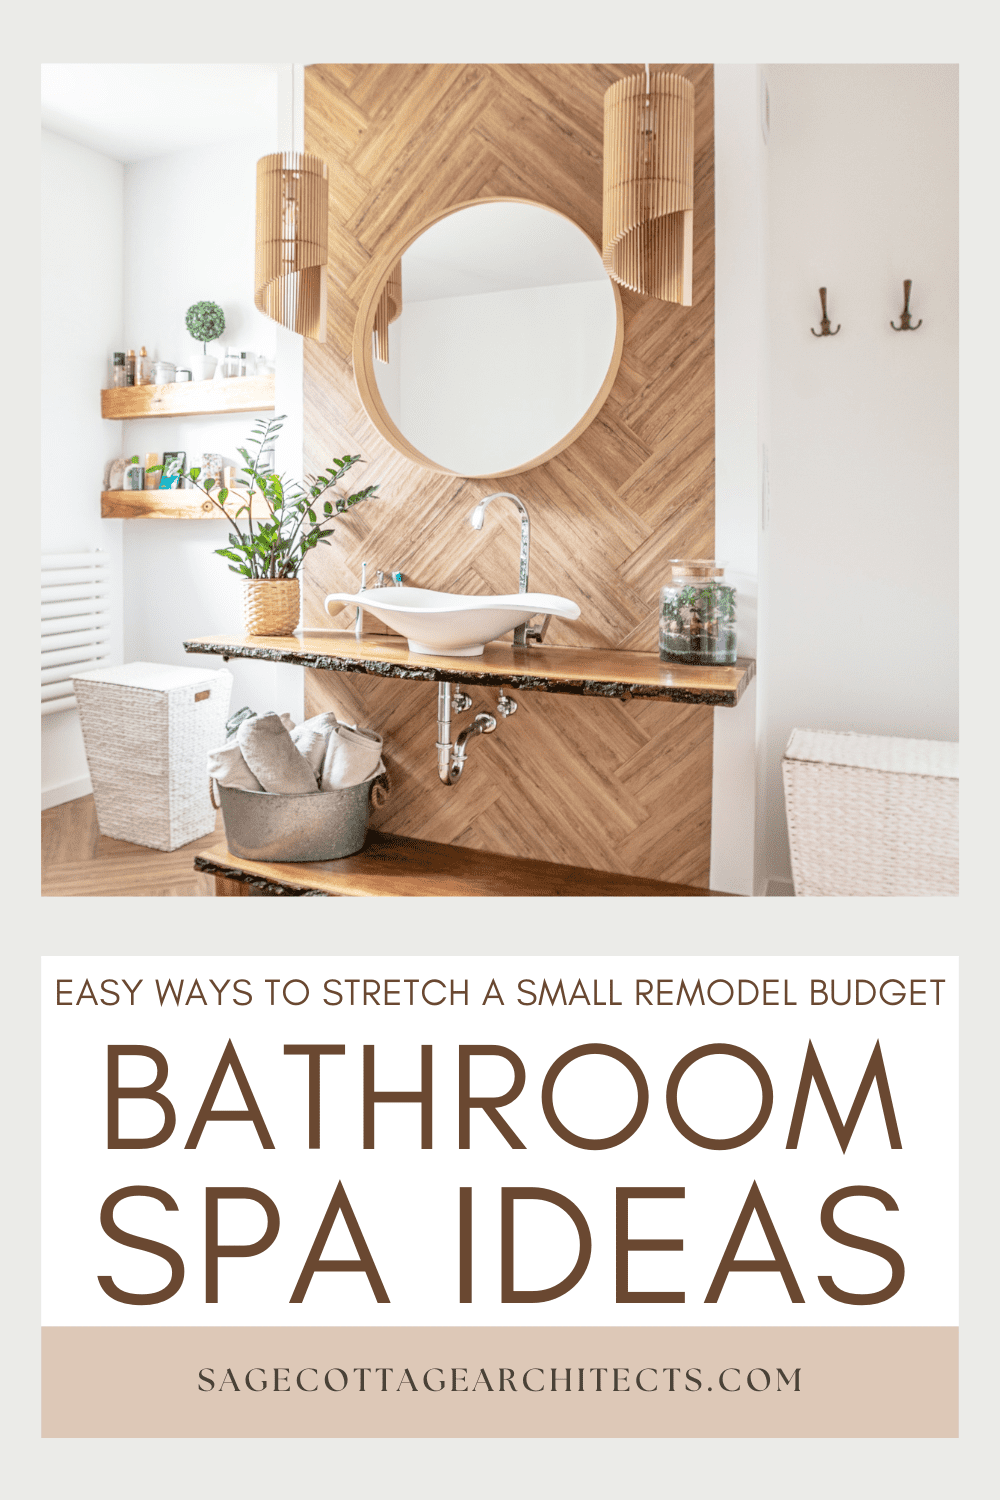 Photo collage of a spa bathroom with the text "Bathroom Spa Ideas"